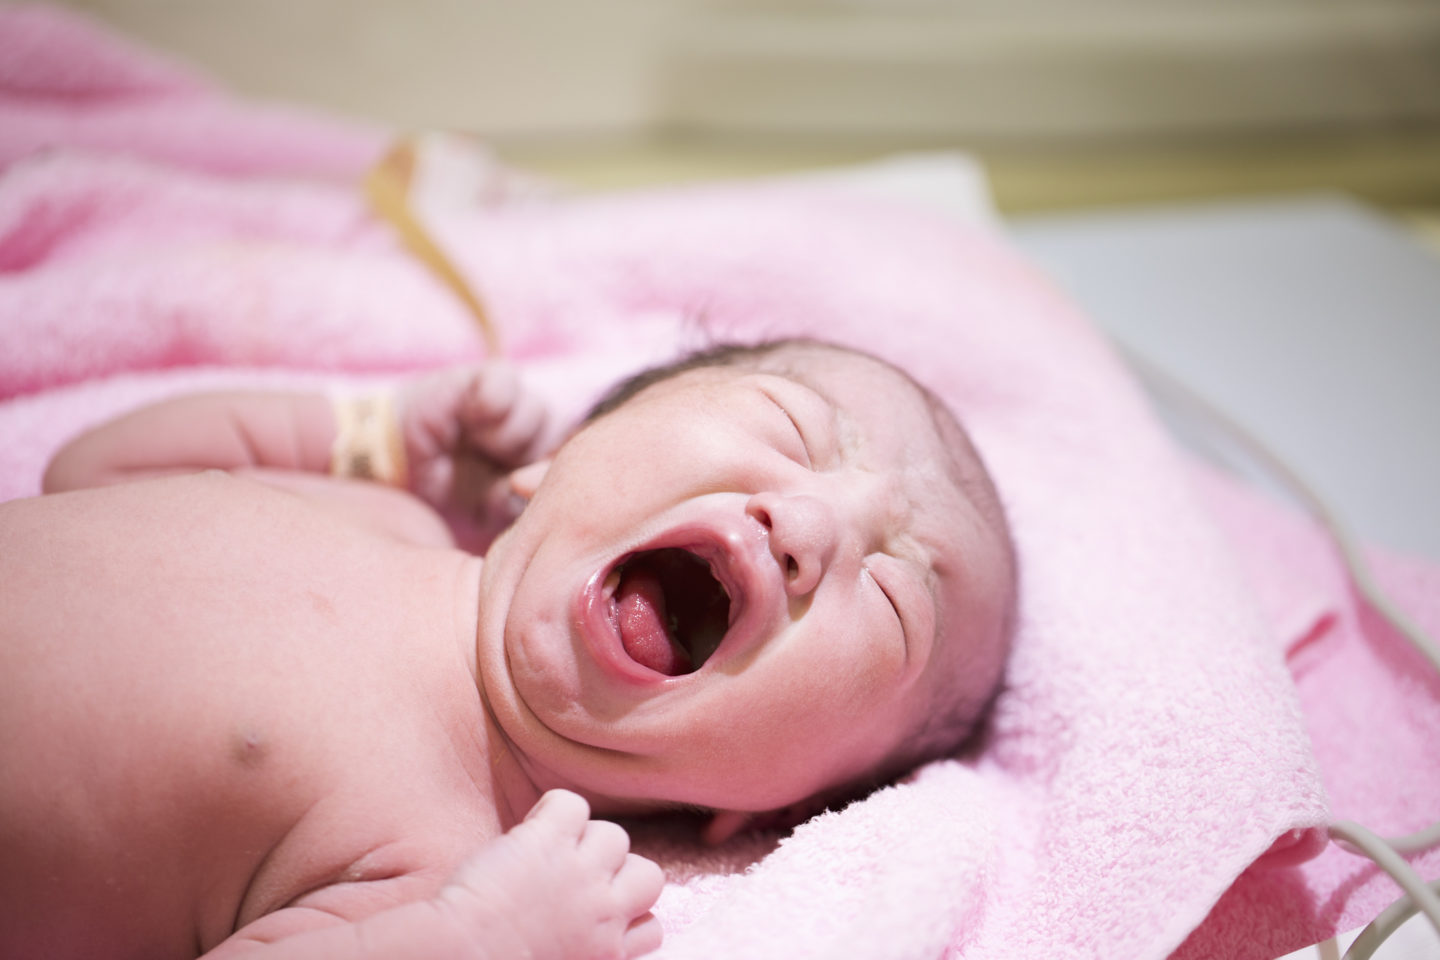 New Way to Prevent Pre-Term Birth?